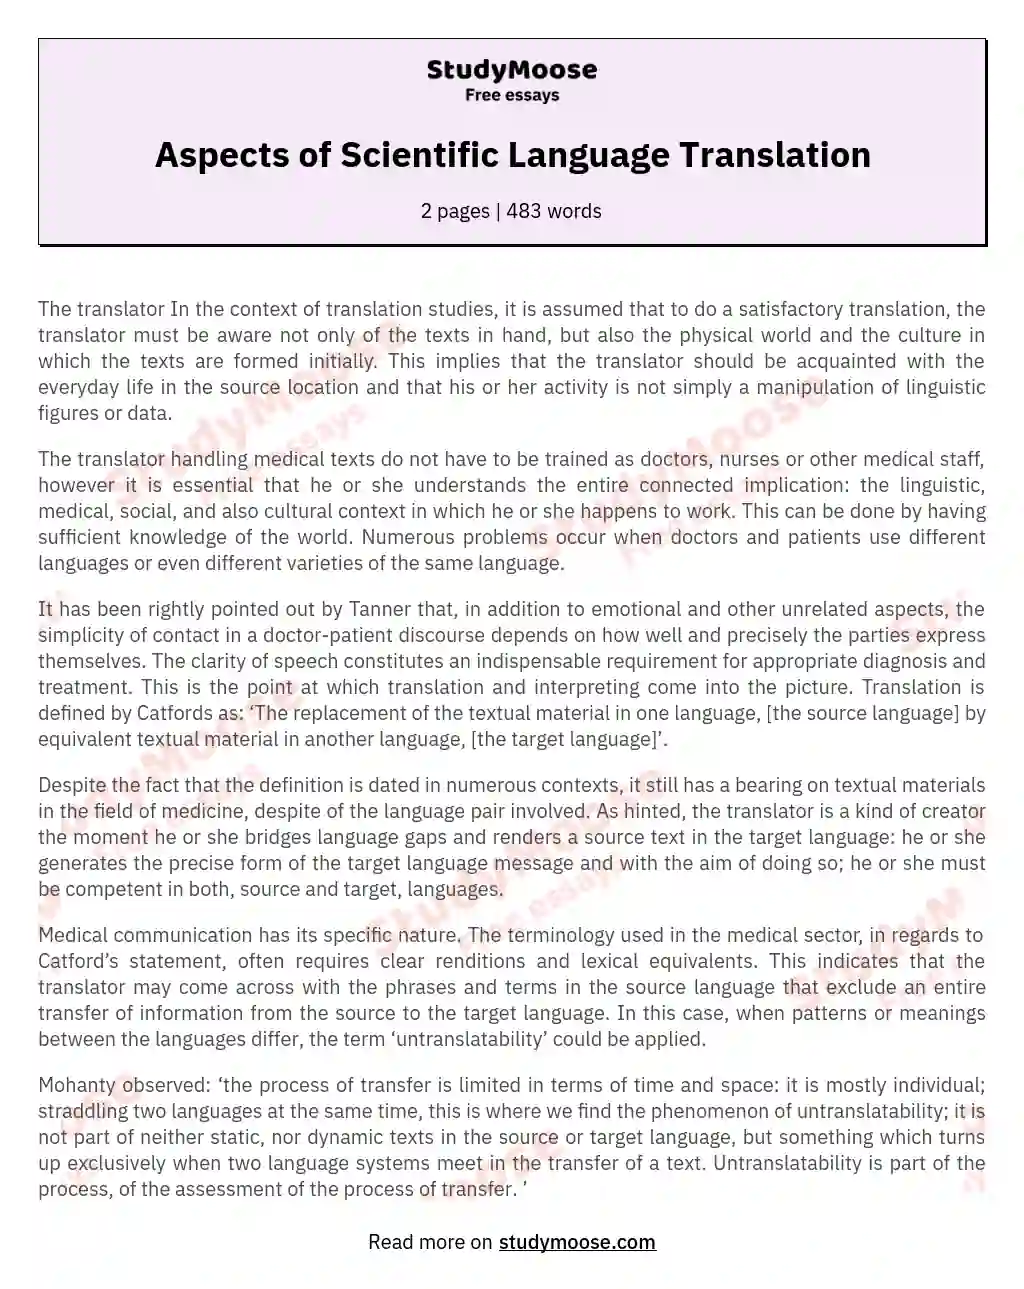 Aspects of Scientific Language Translation